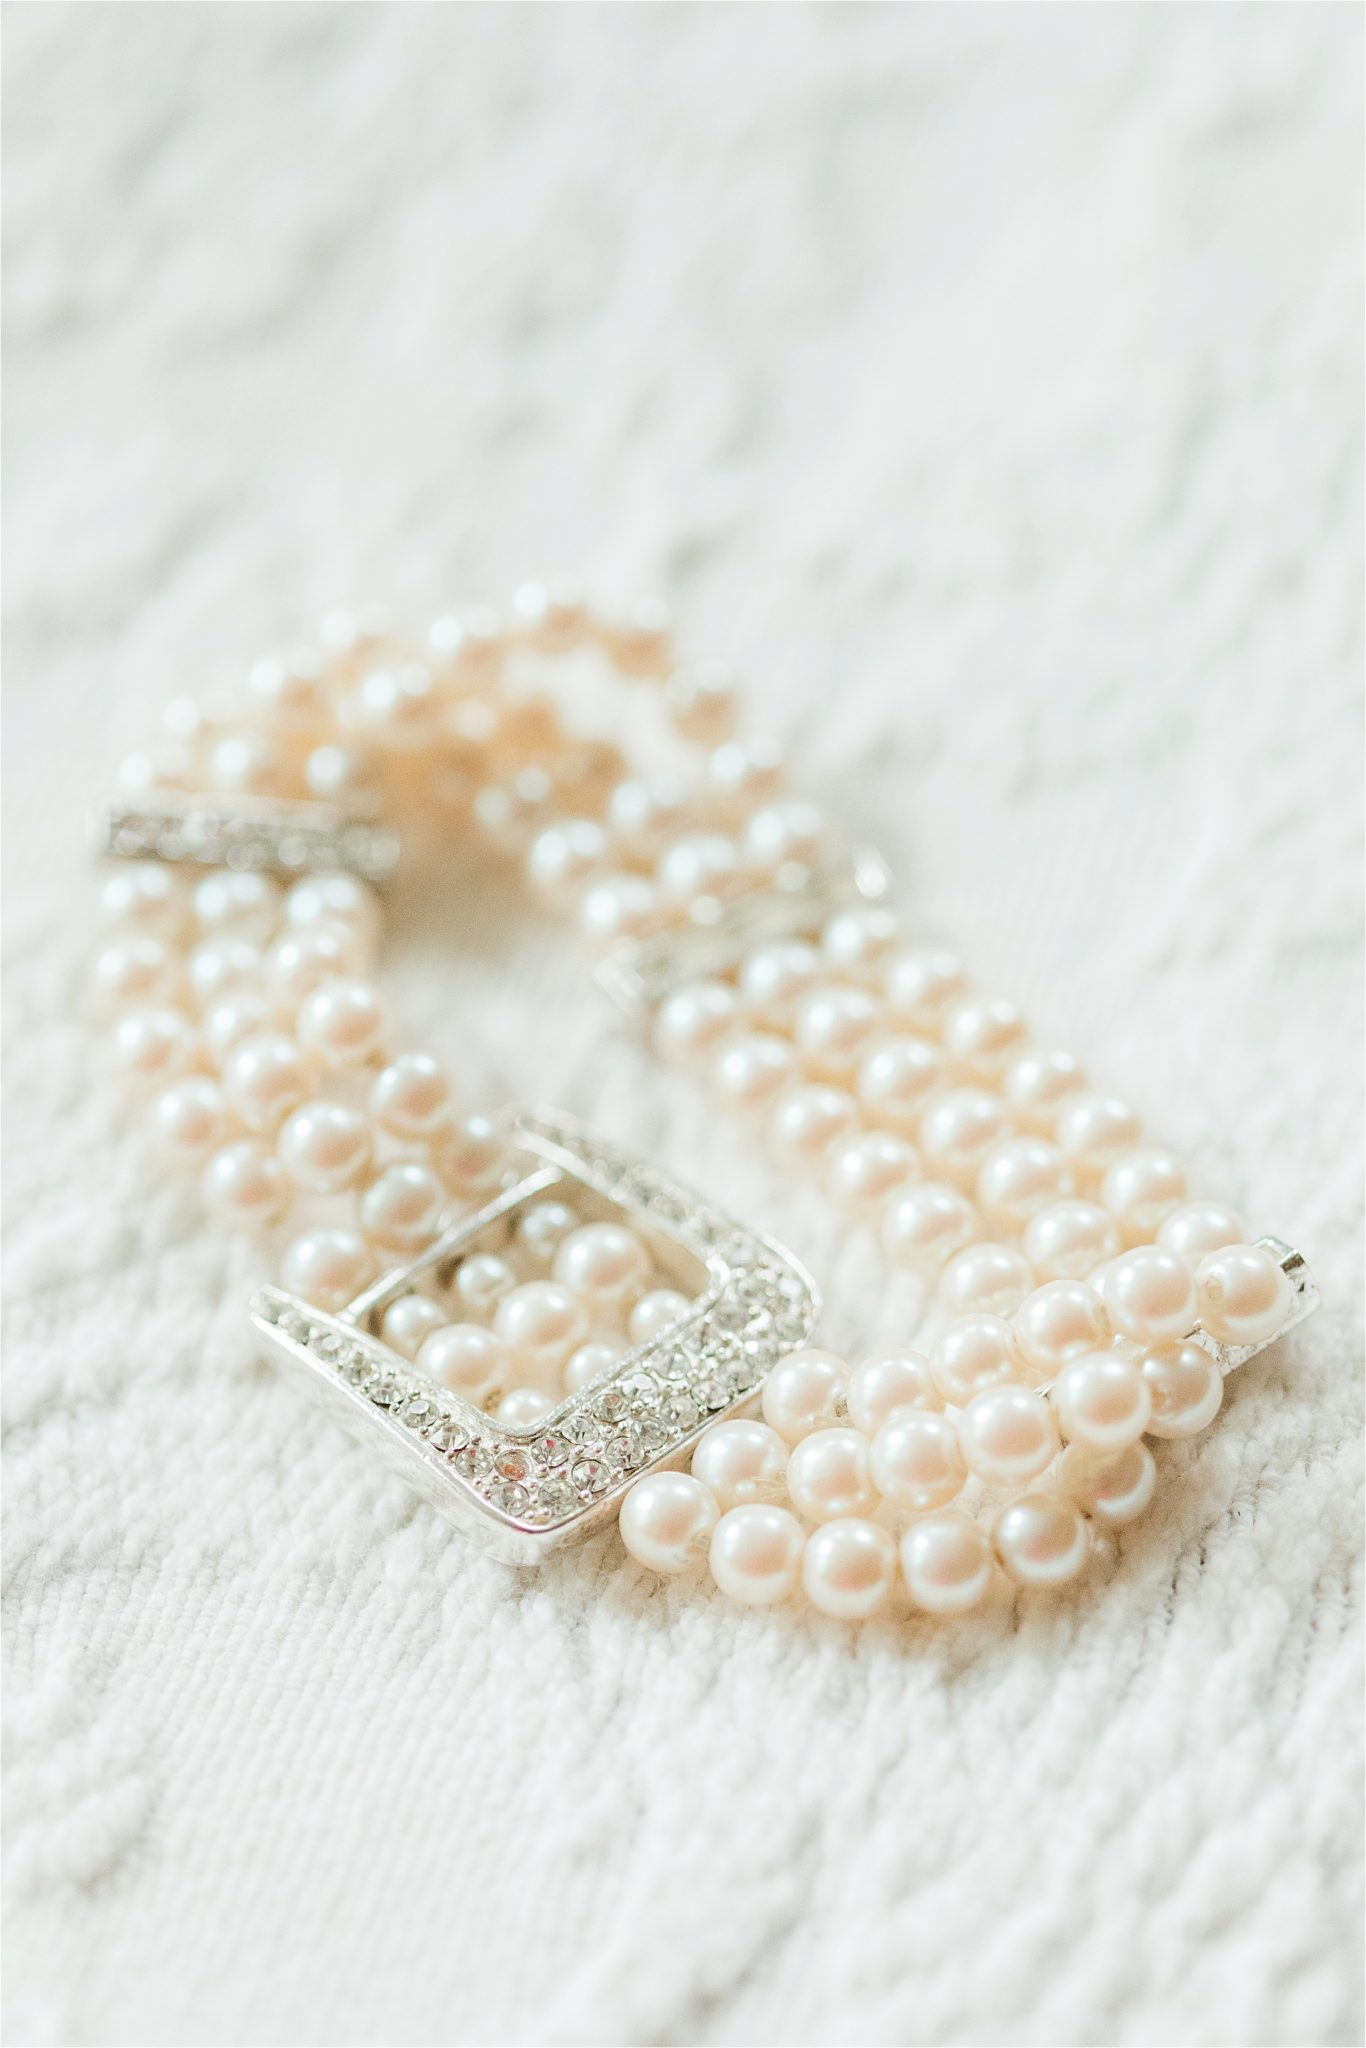 Pearl bridal jewelry-pearls and diamonds-bracelet-wedding jewelry-bridal details